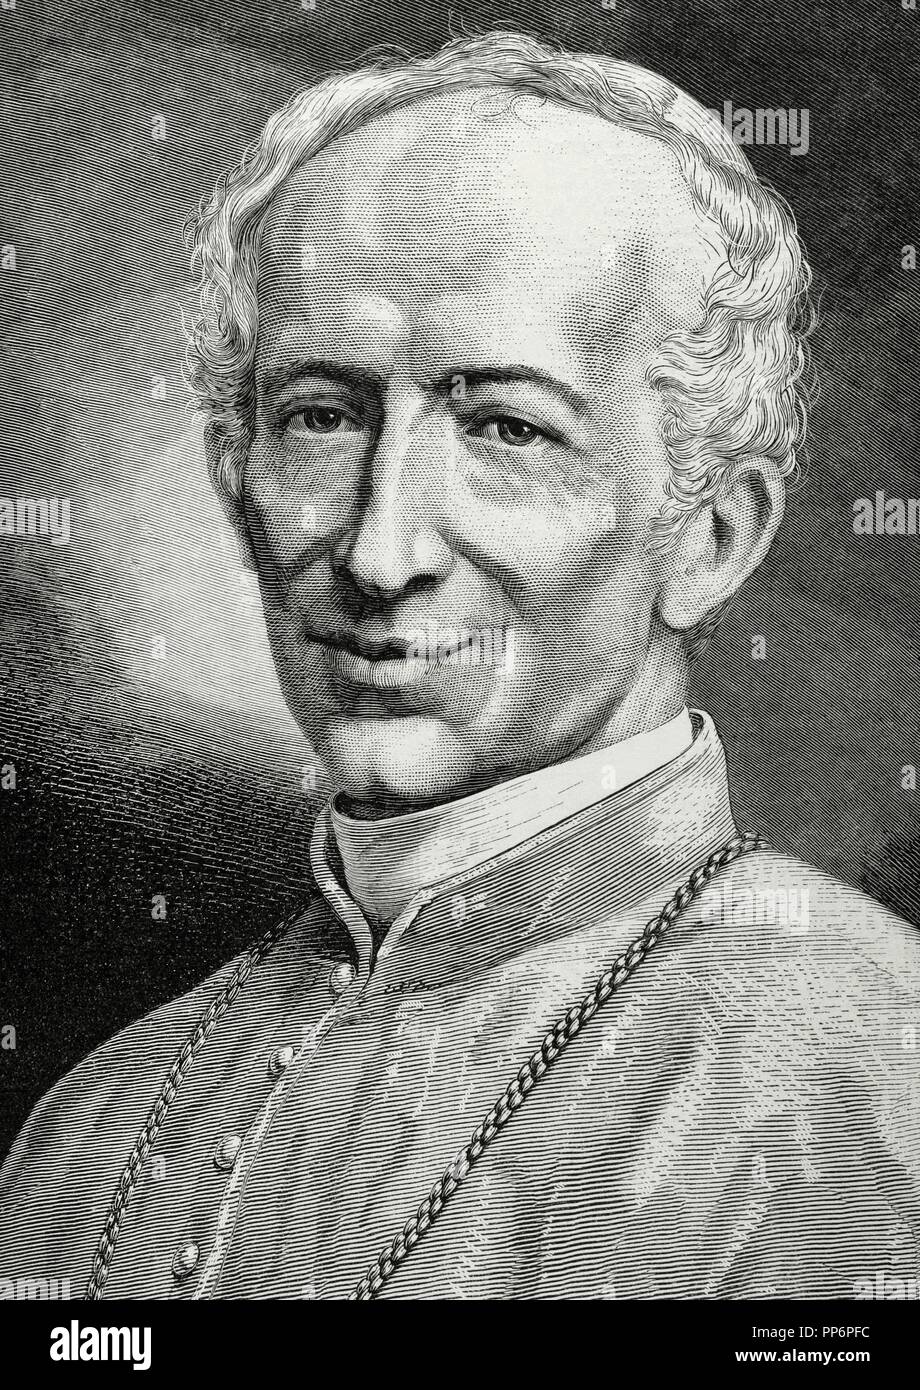 Leo XIII (1810-1903). Italian Pope (1878-1903), named Vincenzo Gioacchino Pecci. Almanac of The Illustration, 1879. Engraving. Stock Photo